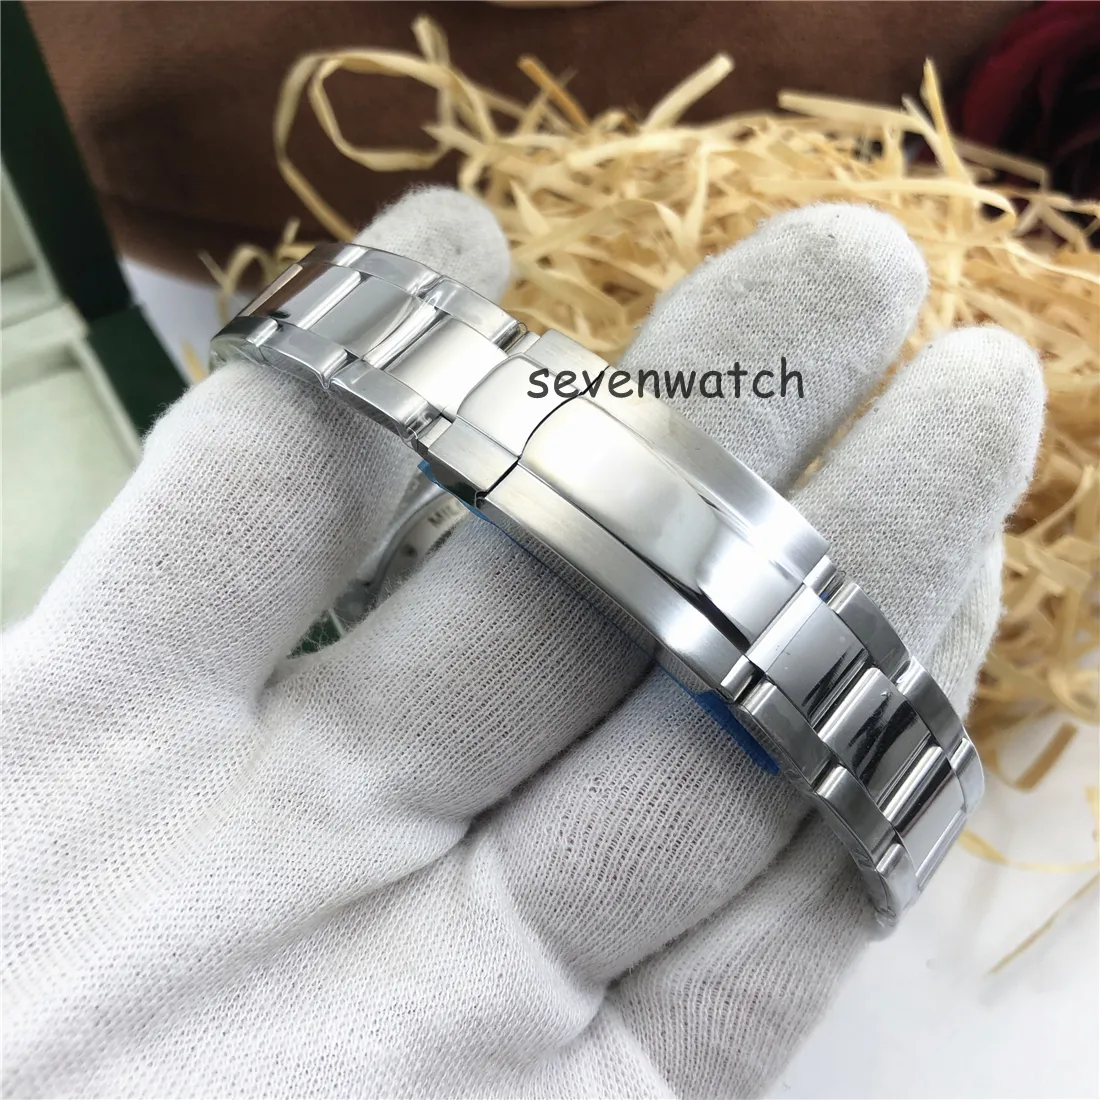 Lsolated campo magnético luxuoso horloge orologio di lusso reloj de lujo relógio automático pulseira de aço inoxidável mostrador preto masculino 271c